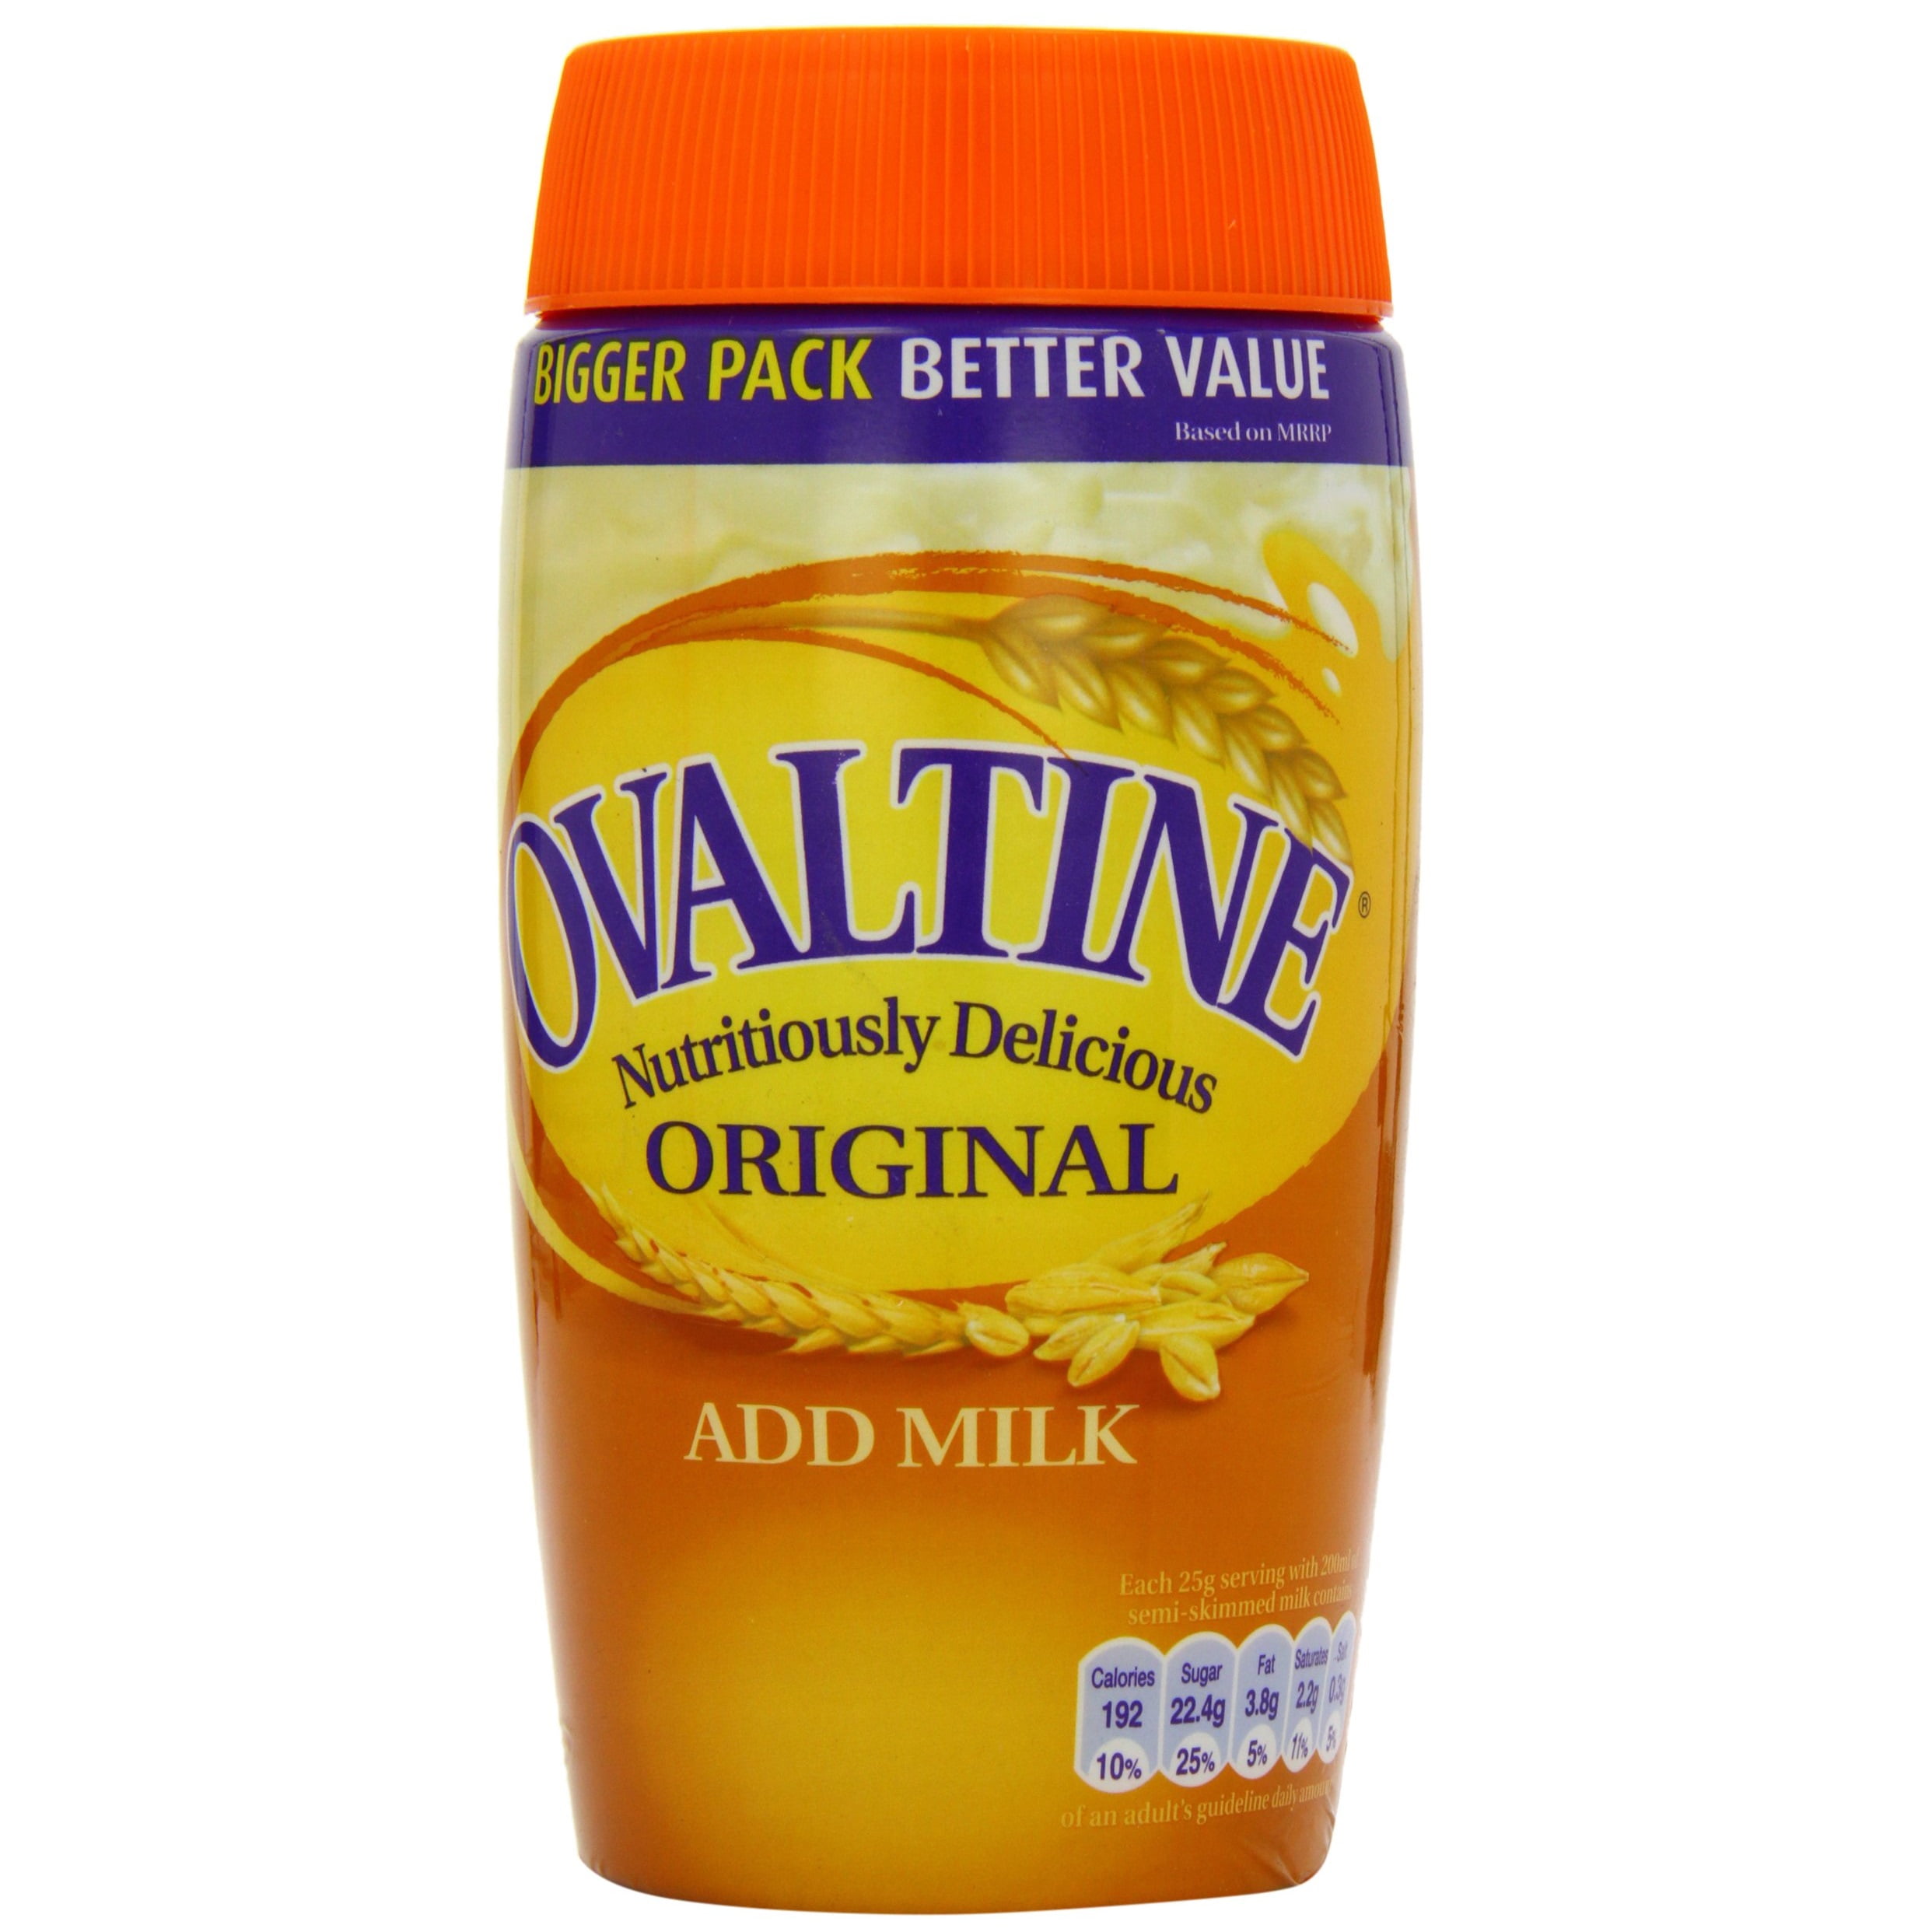 Ovaltine Original Add Milk Jar 500g - Pack of 2